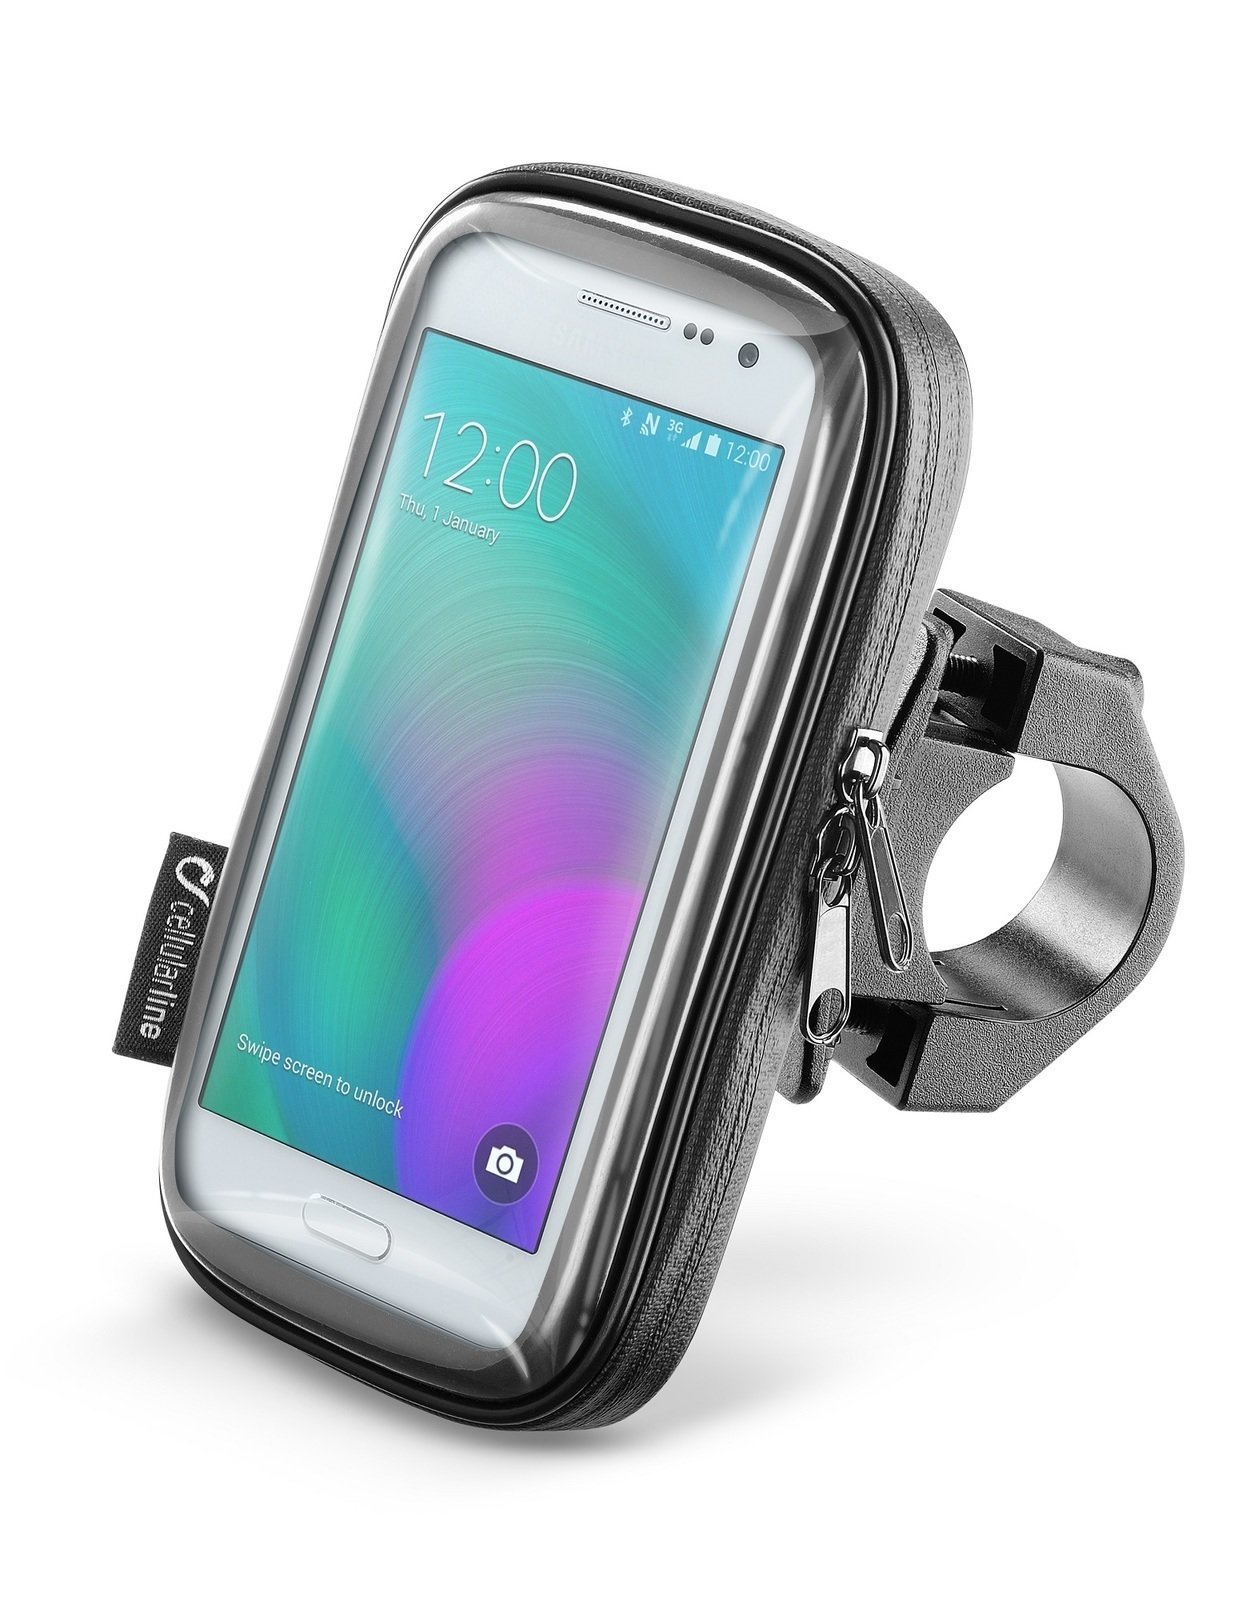 Housse, Etui moto smartphone / GPS Interphone Unicase for Smartphones Up to 4.5''